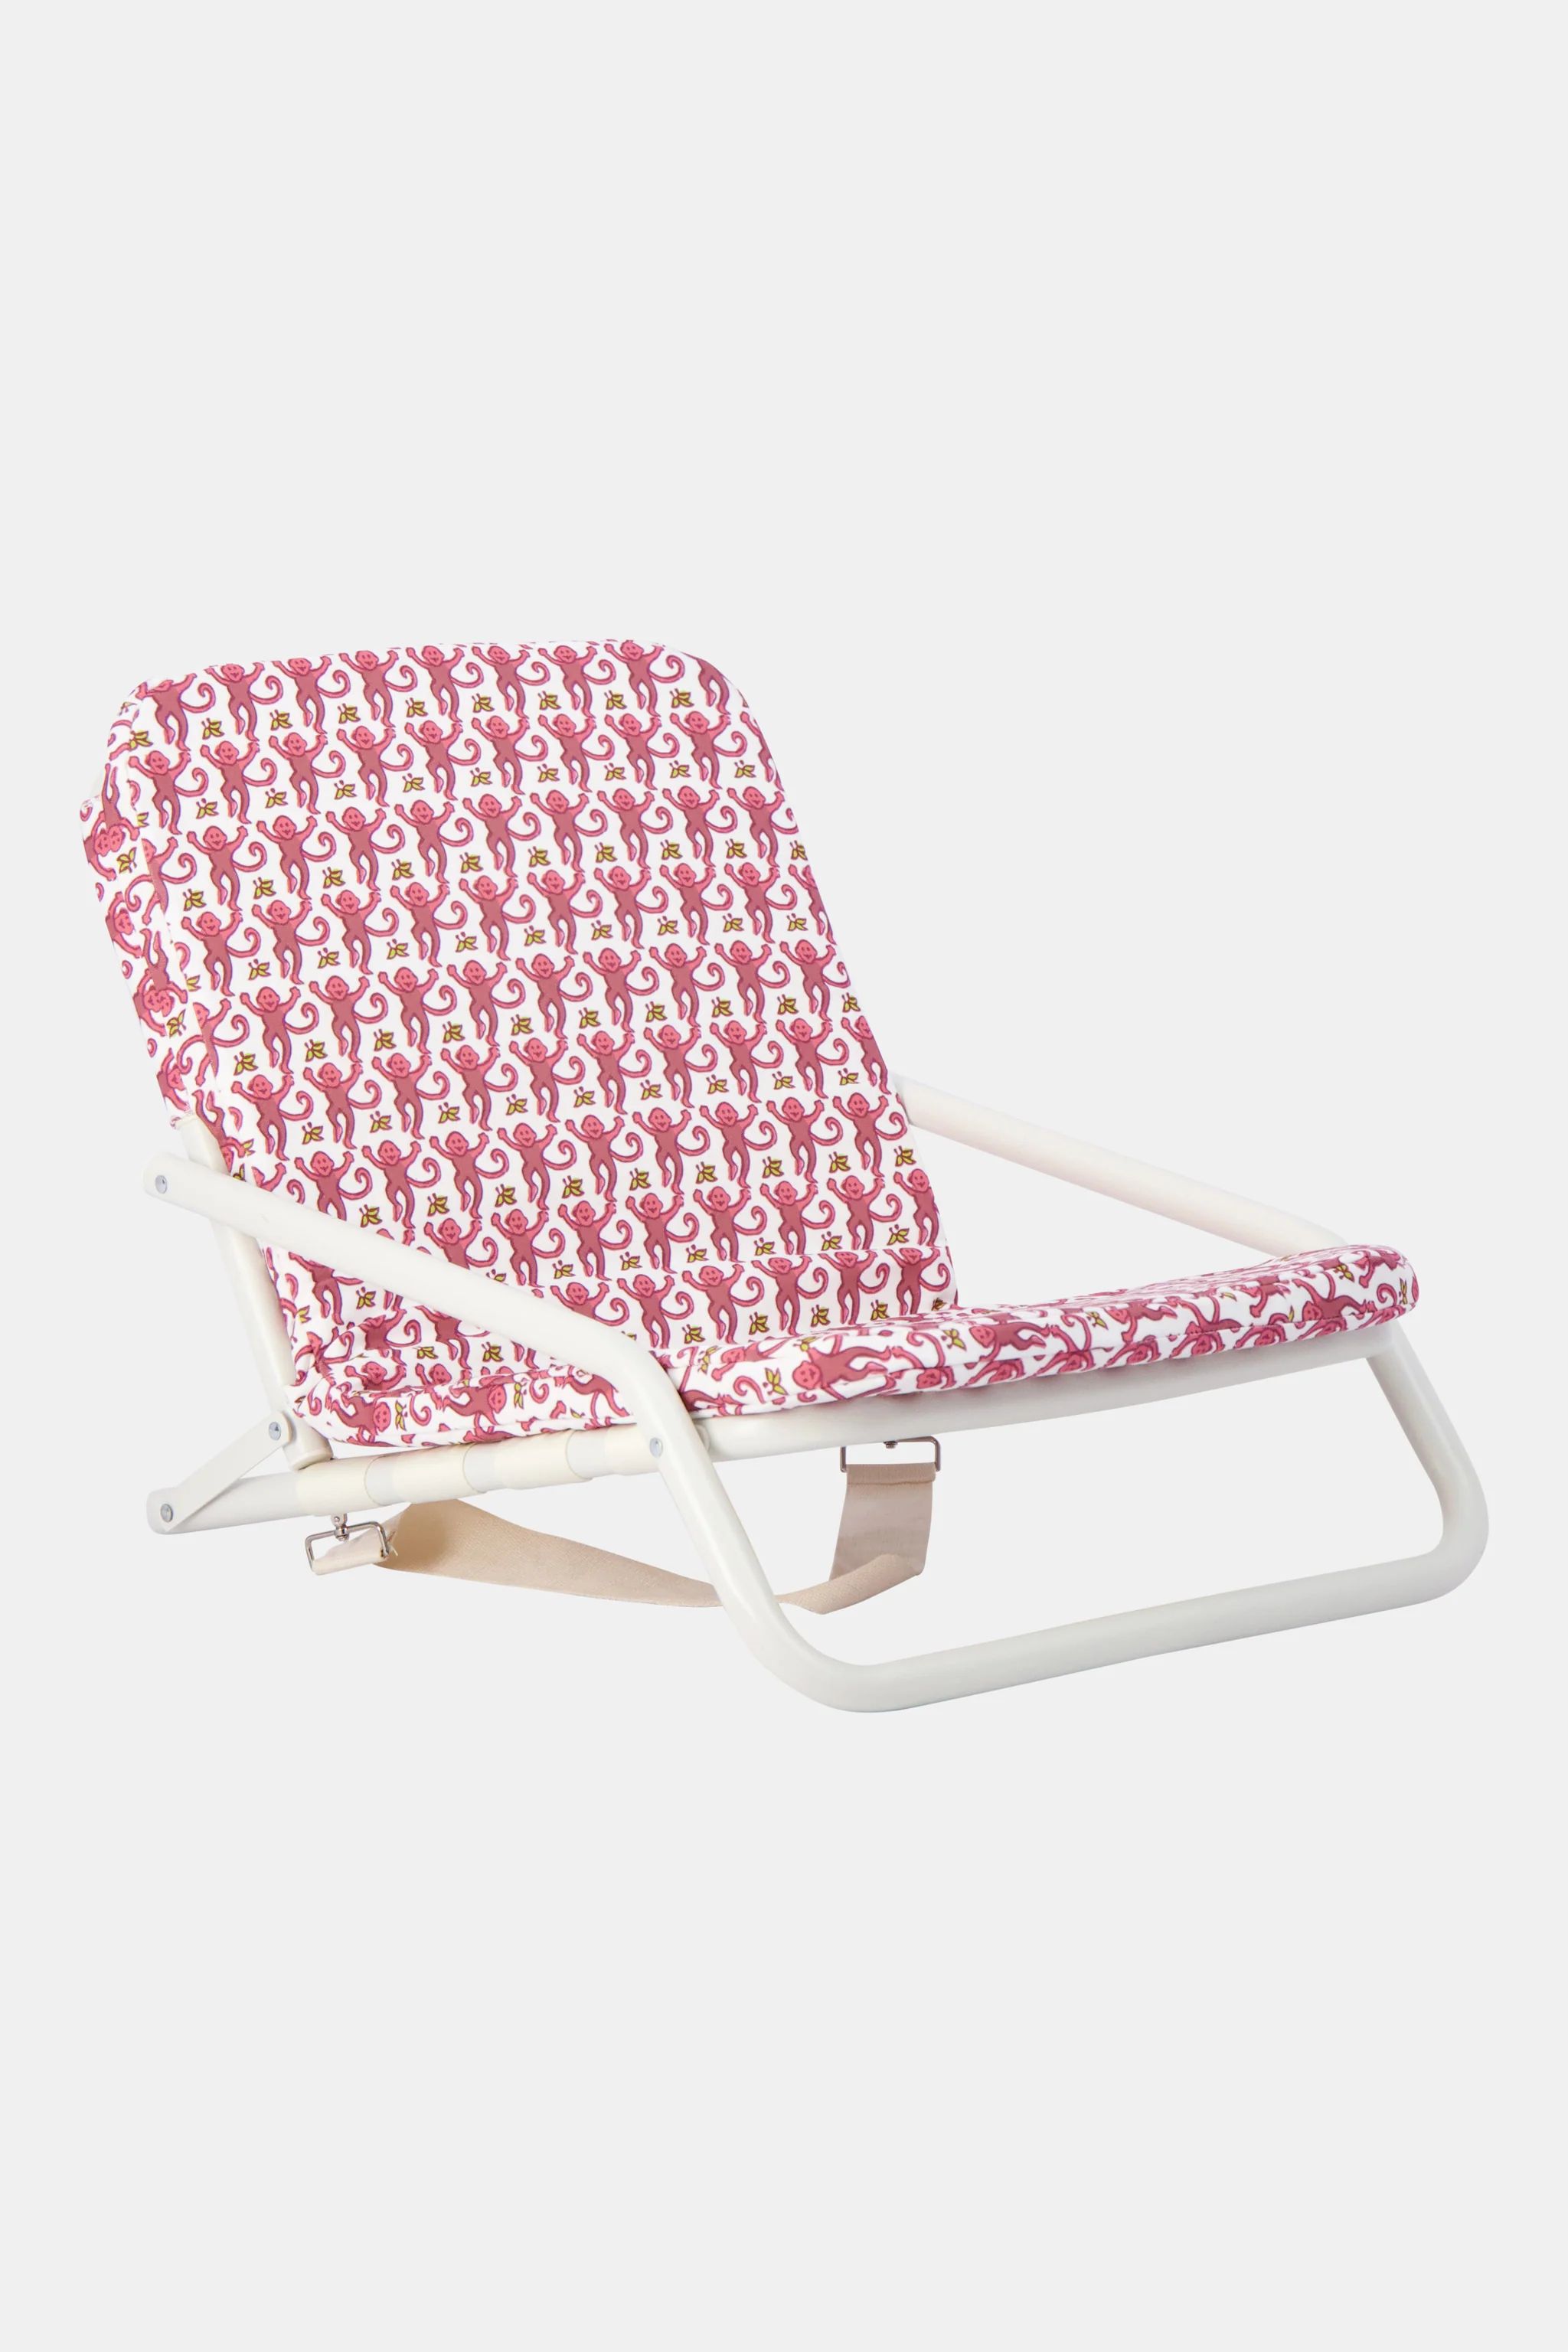 Monkey Beach Chair | Roller Rabbit | Roller Rabbit